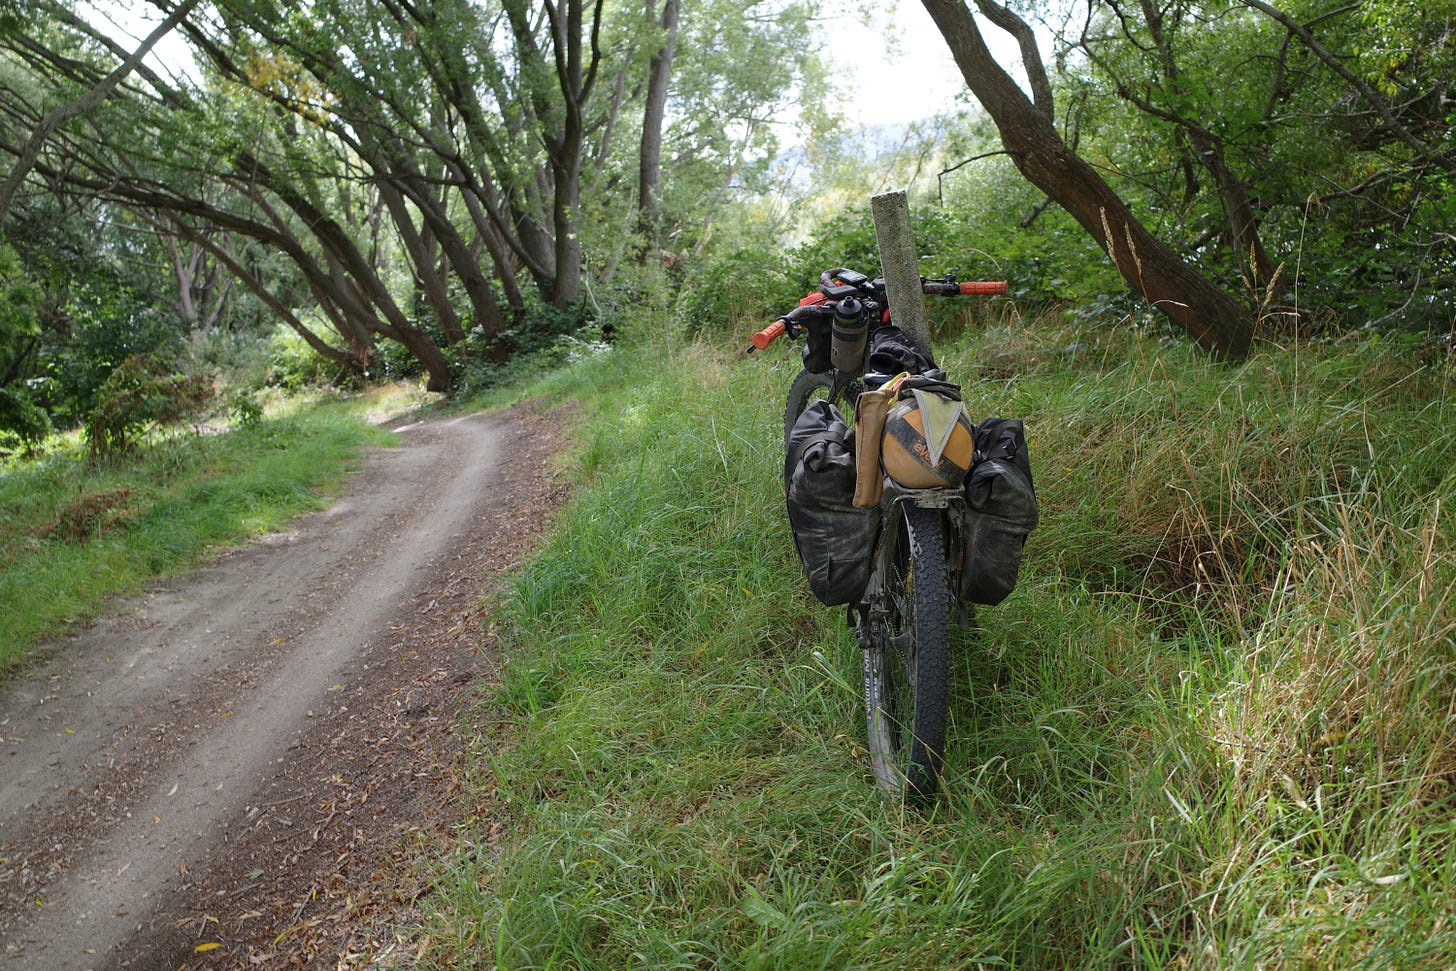 Robbie's Salsa Fargo bike on the side of a trail